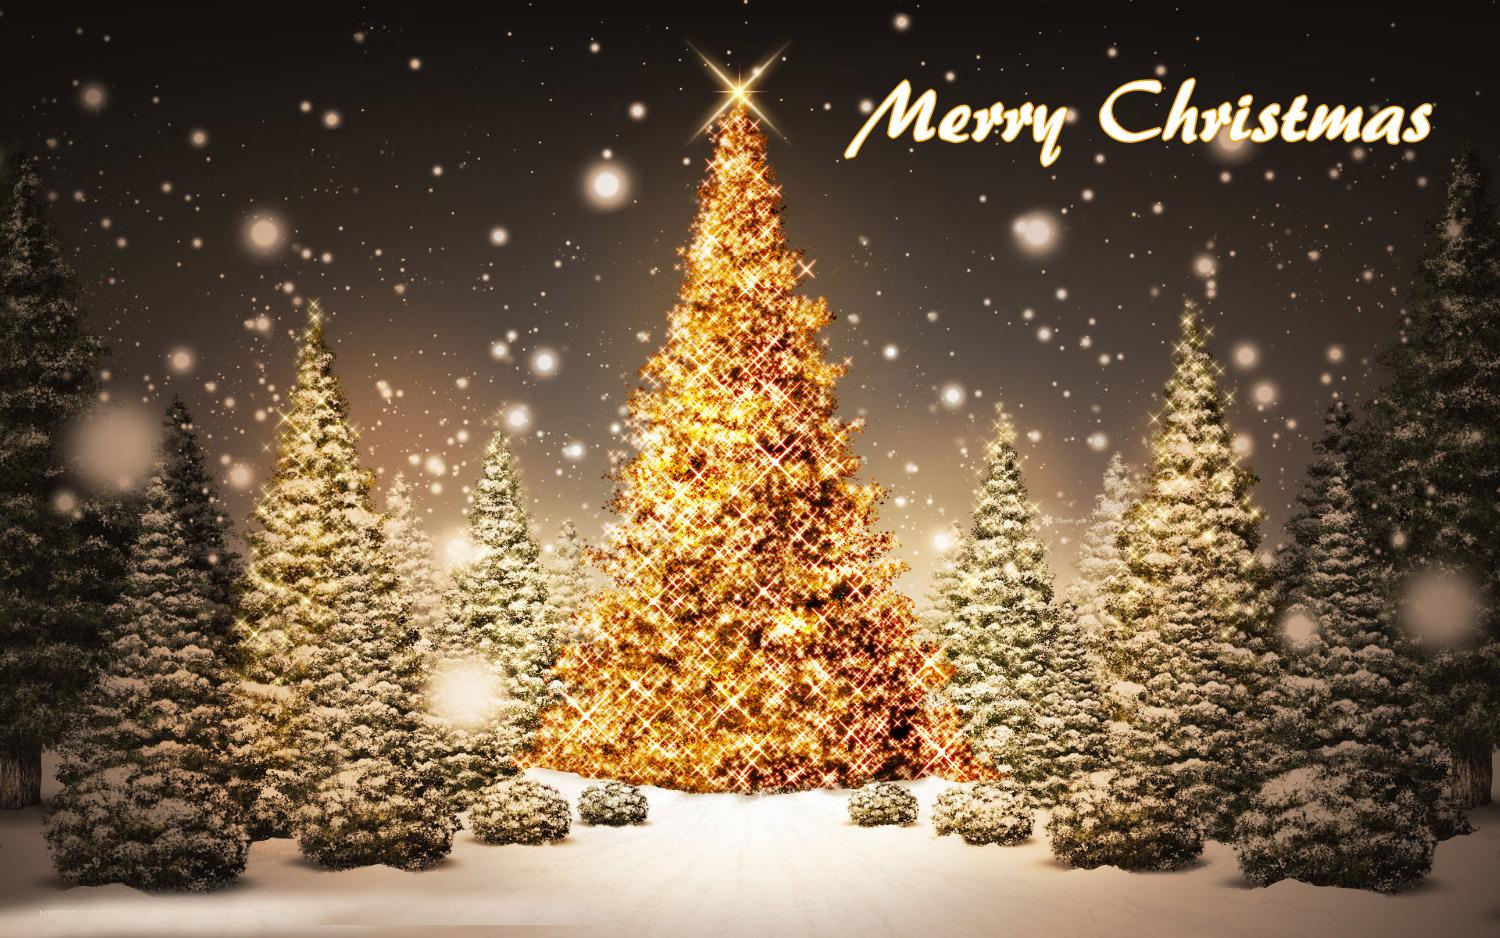 http://techbeasts.com/wp-content/uploads/2016/12/Merry-Christmas-Tree-Hd-Wallpaper-free-download.jpg